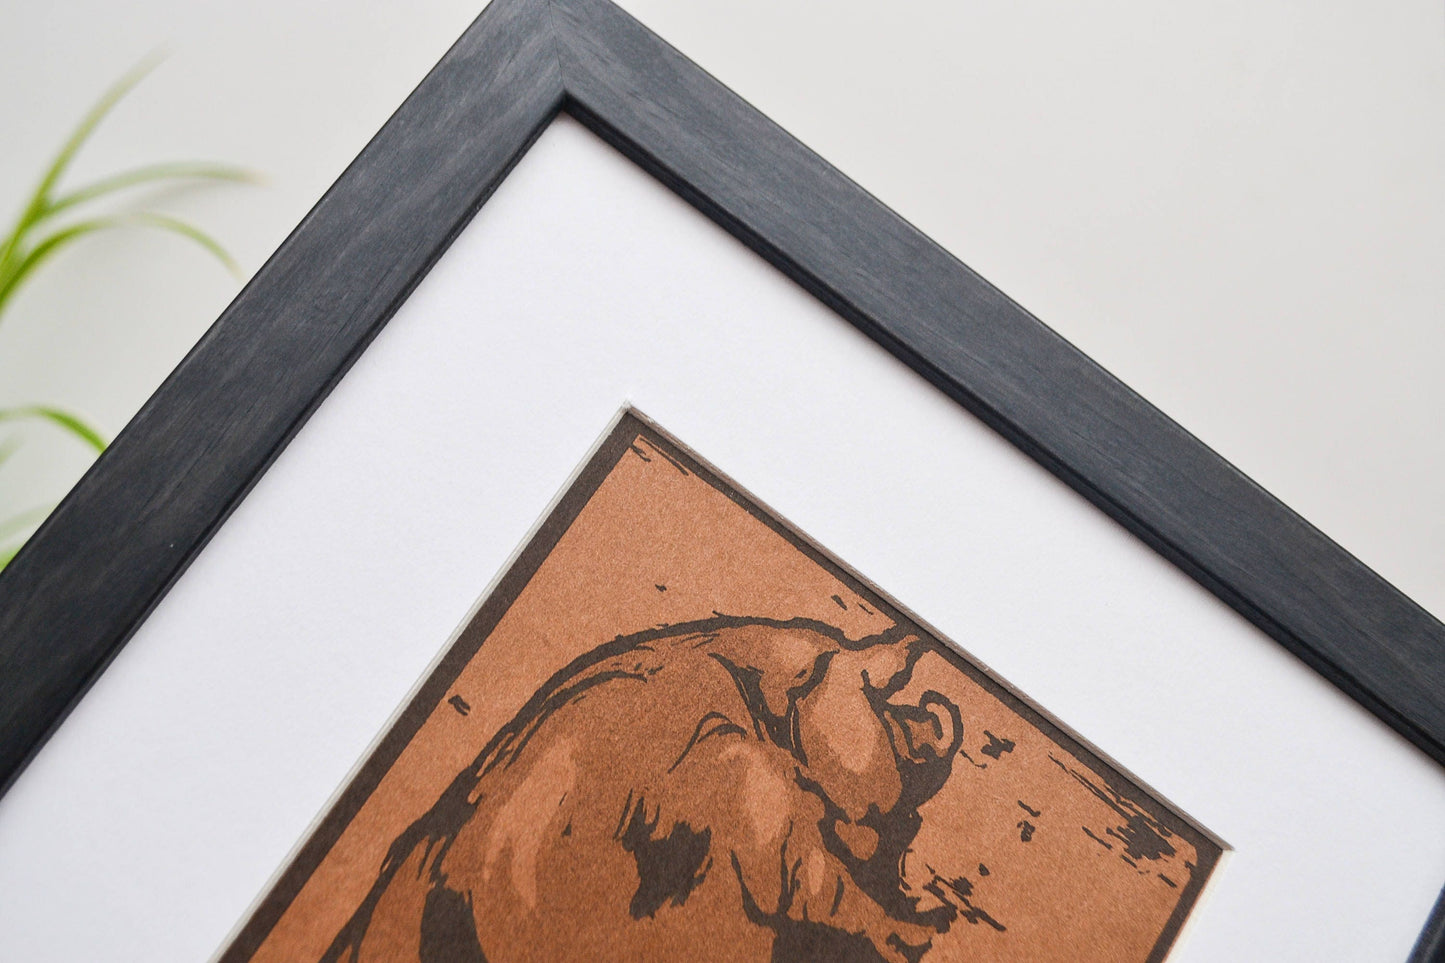 Vintage Pig illustration print - Square art pigs print